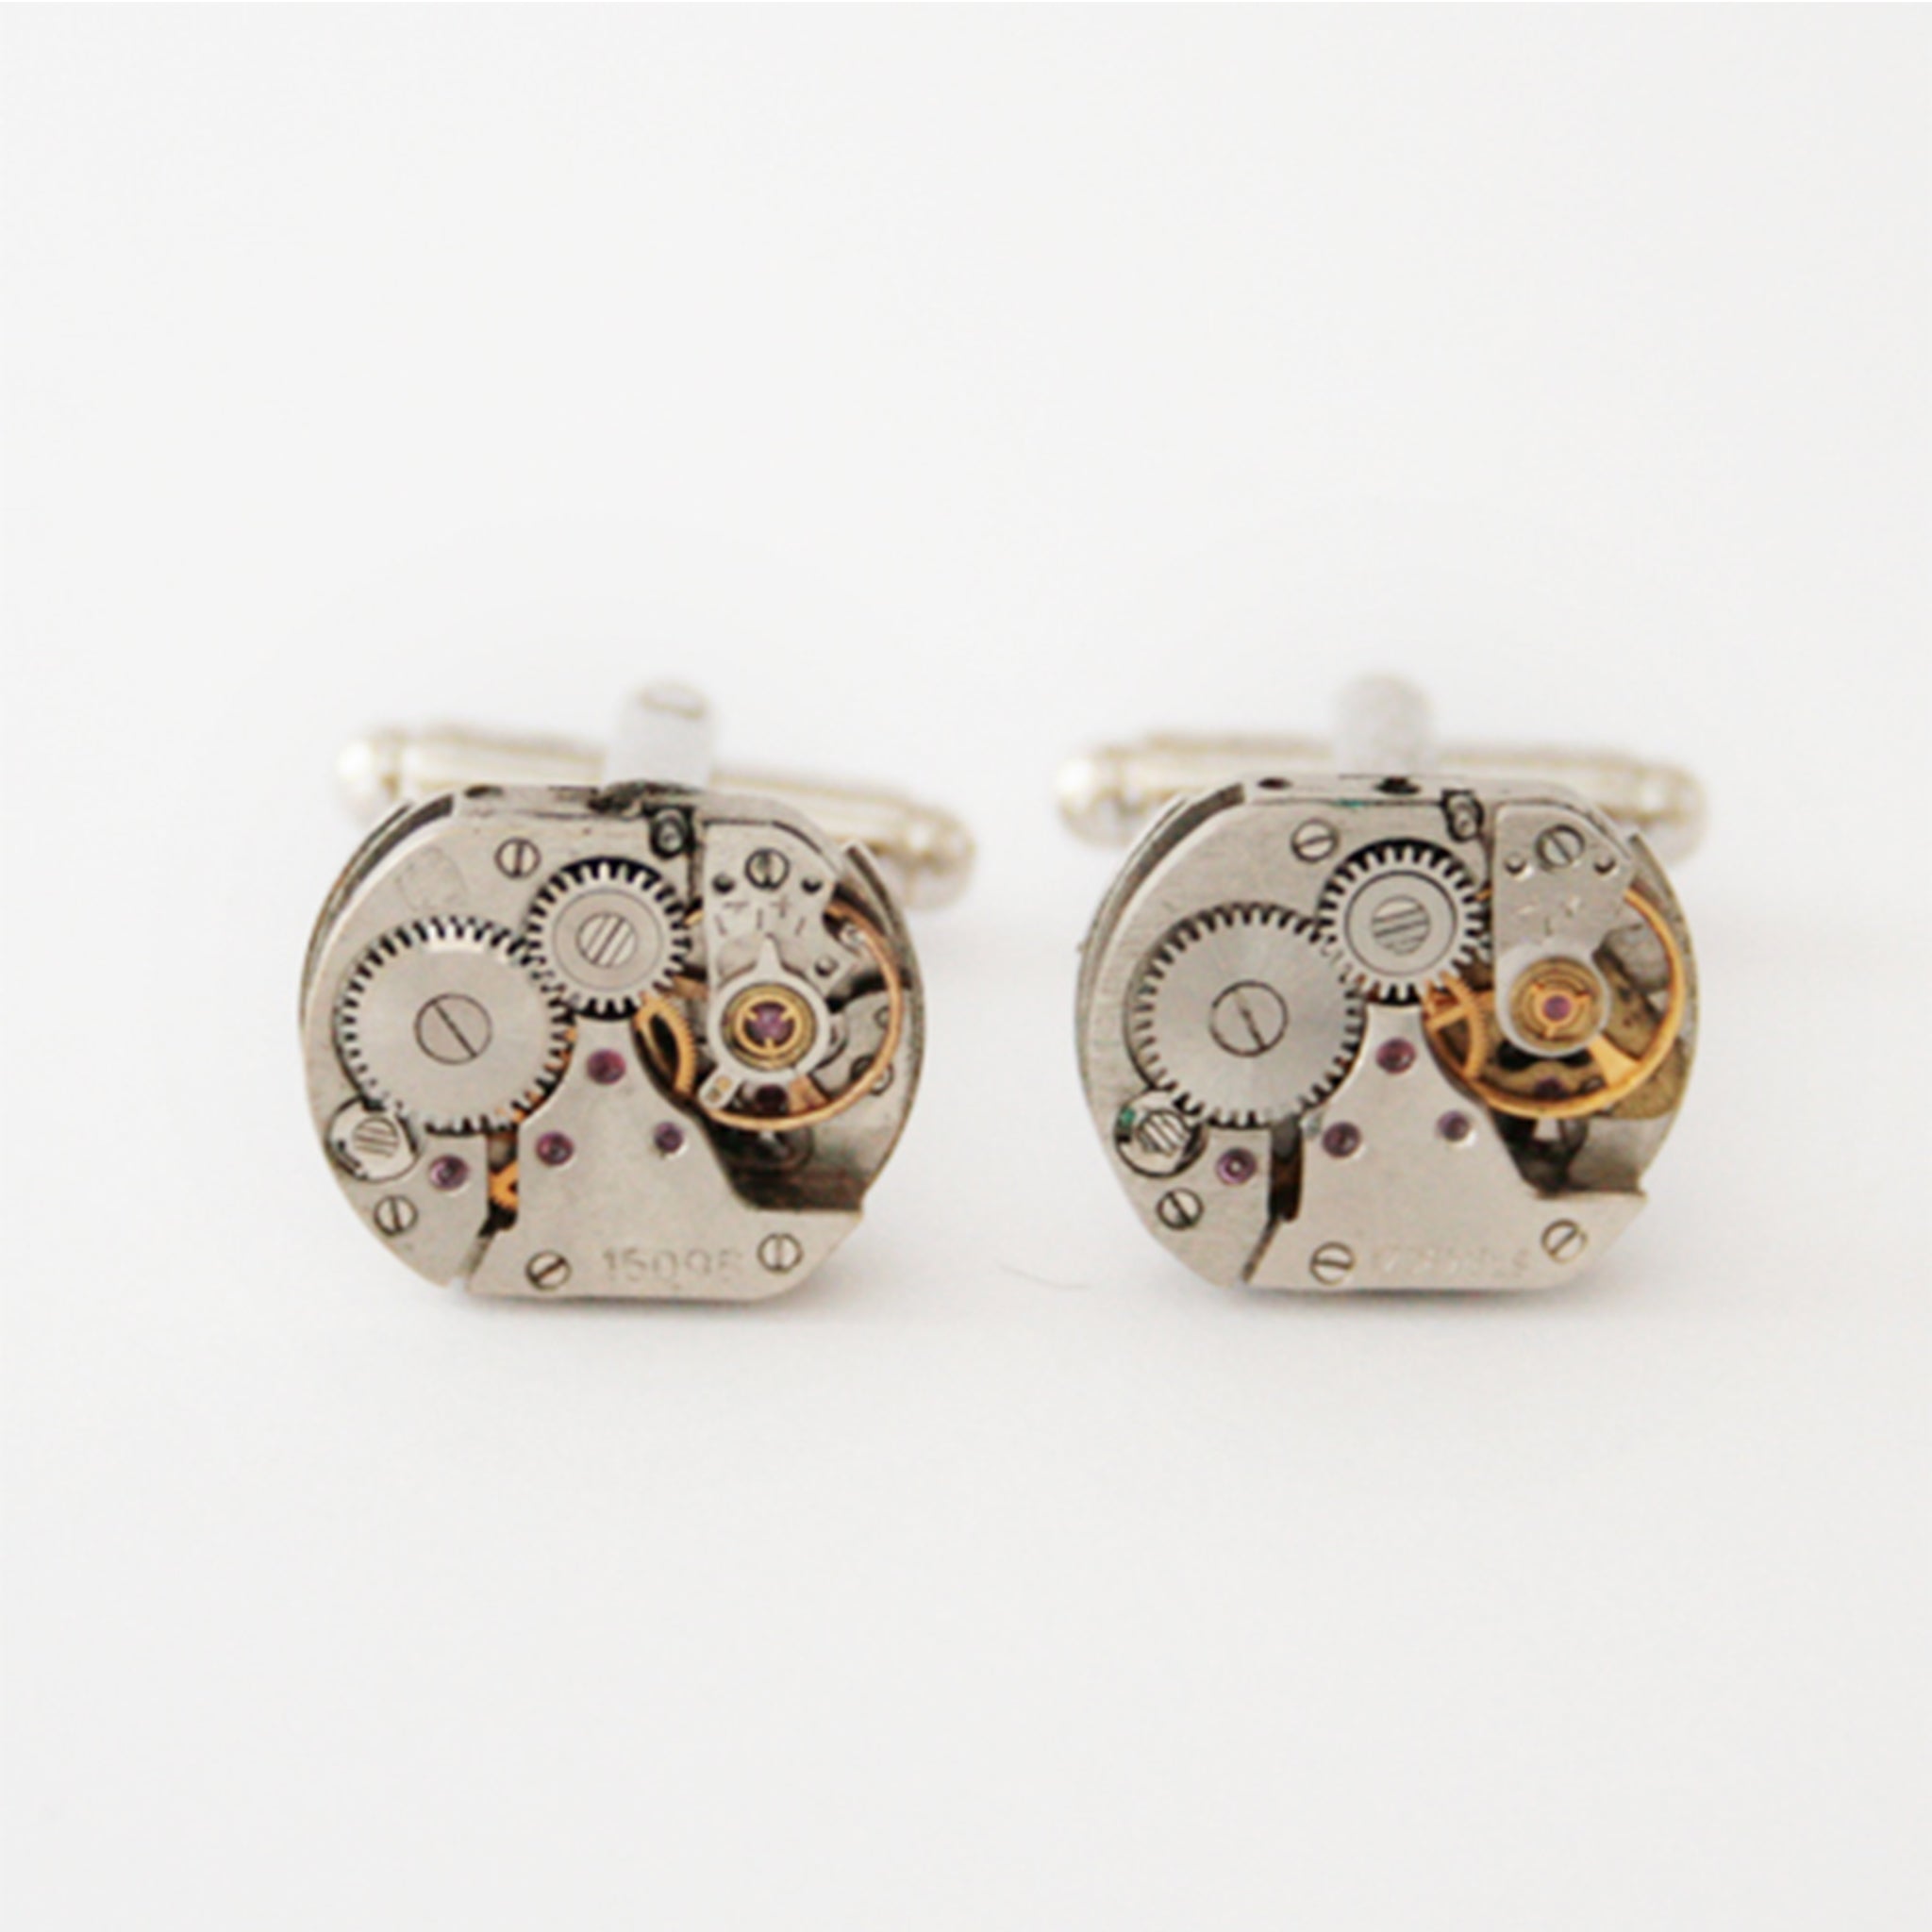 steampunk cufflinks for men featuring antique watch movements